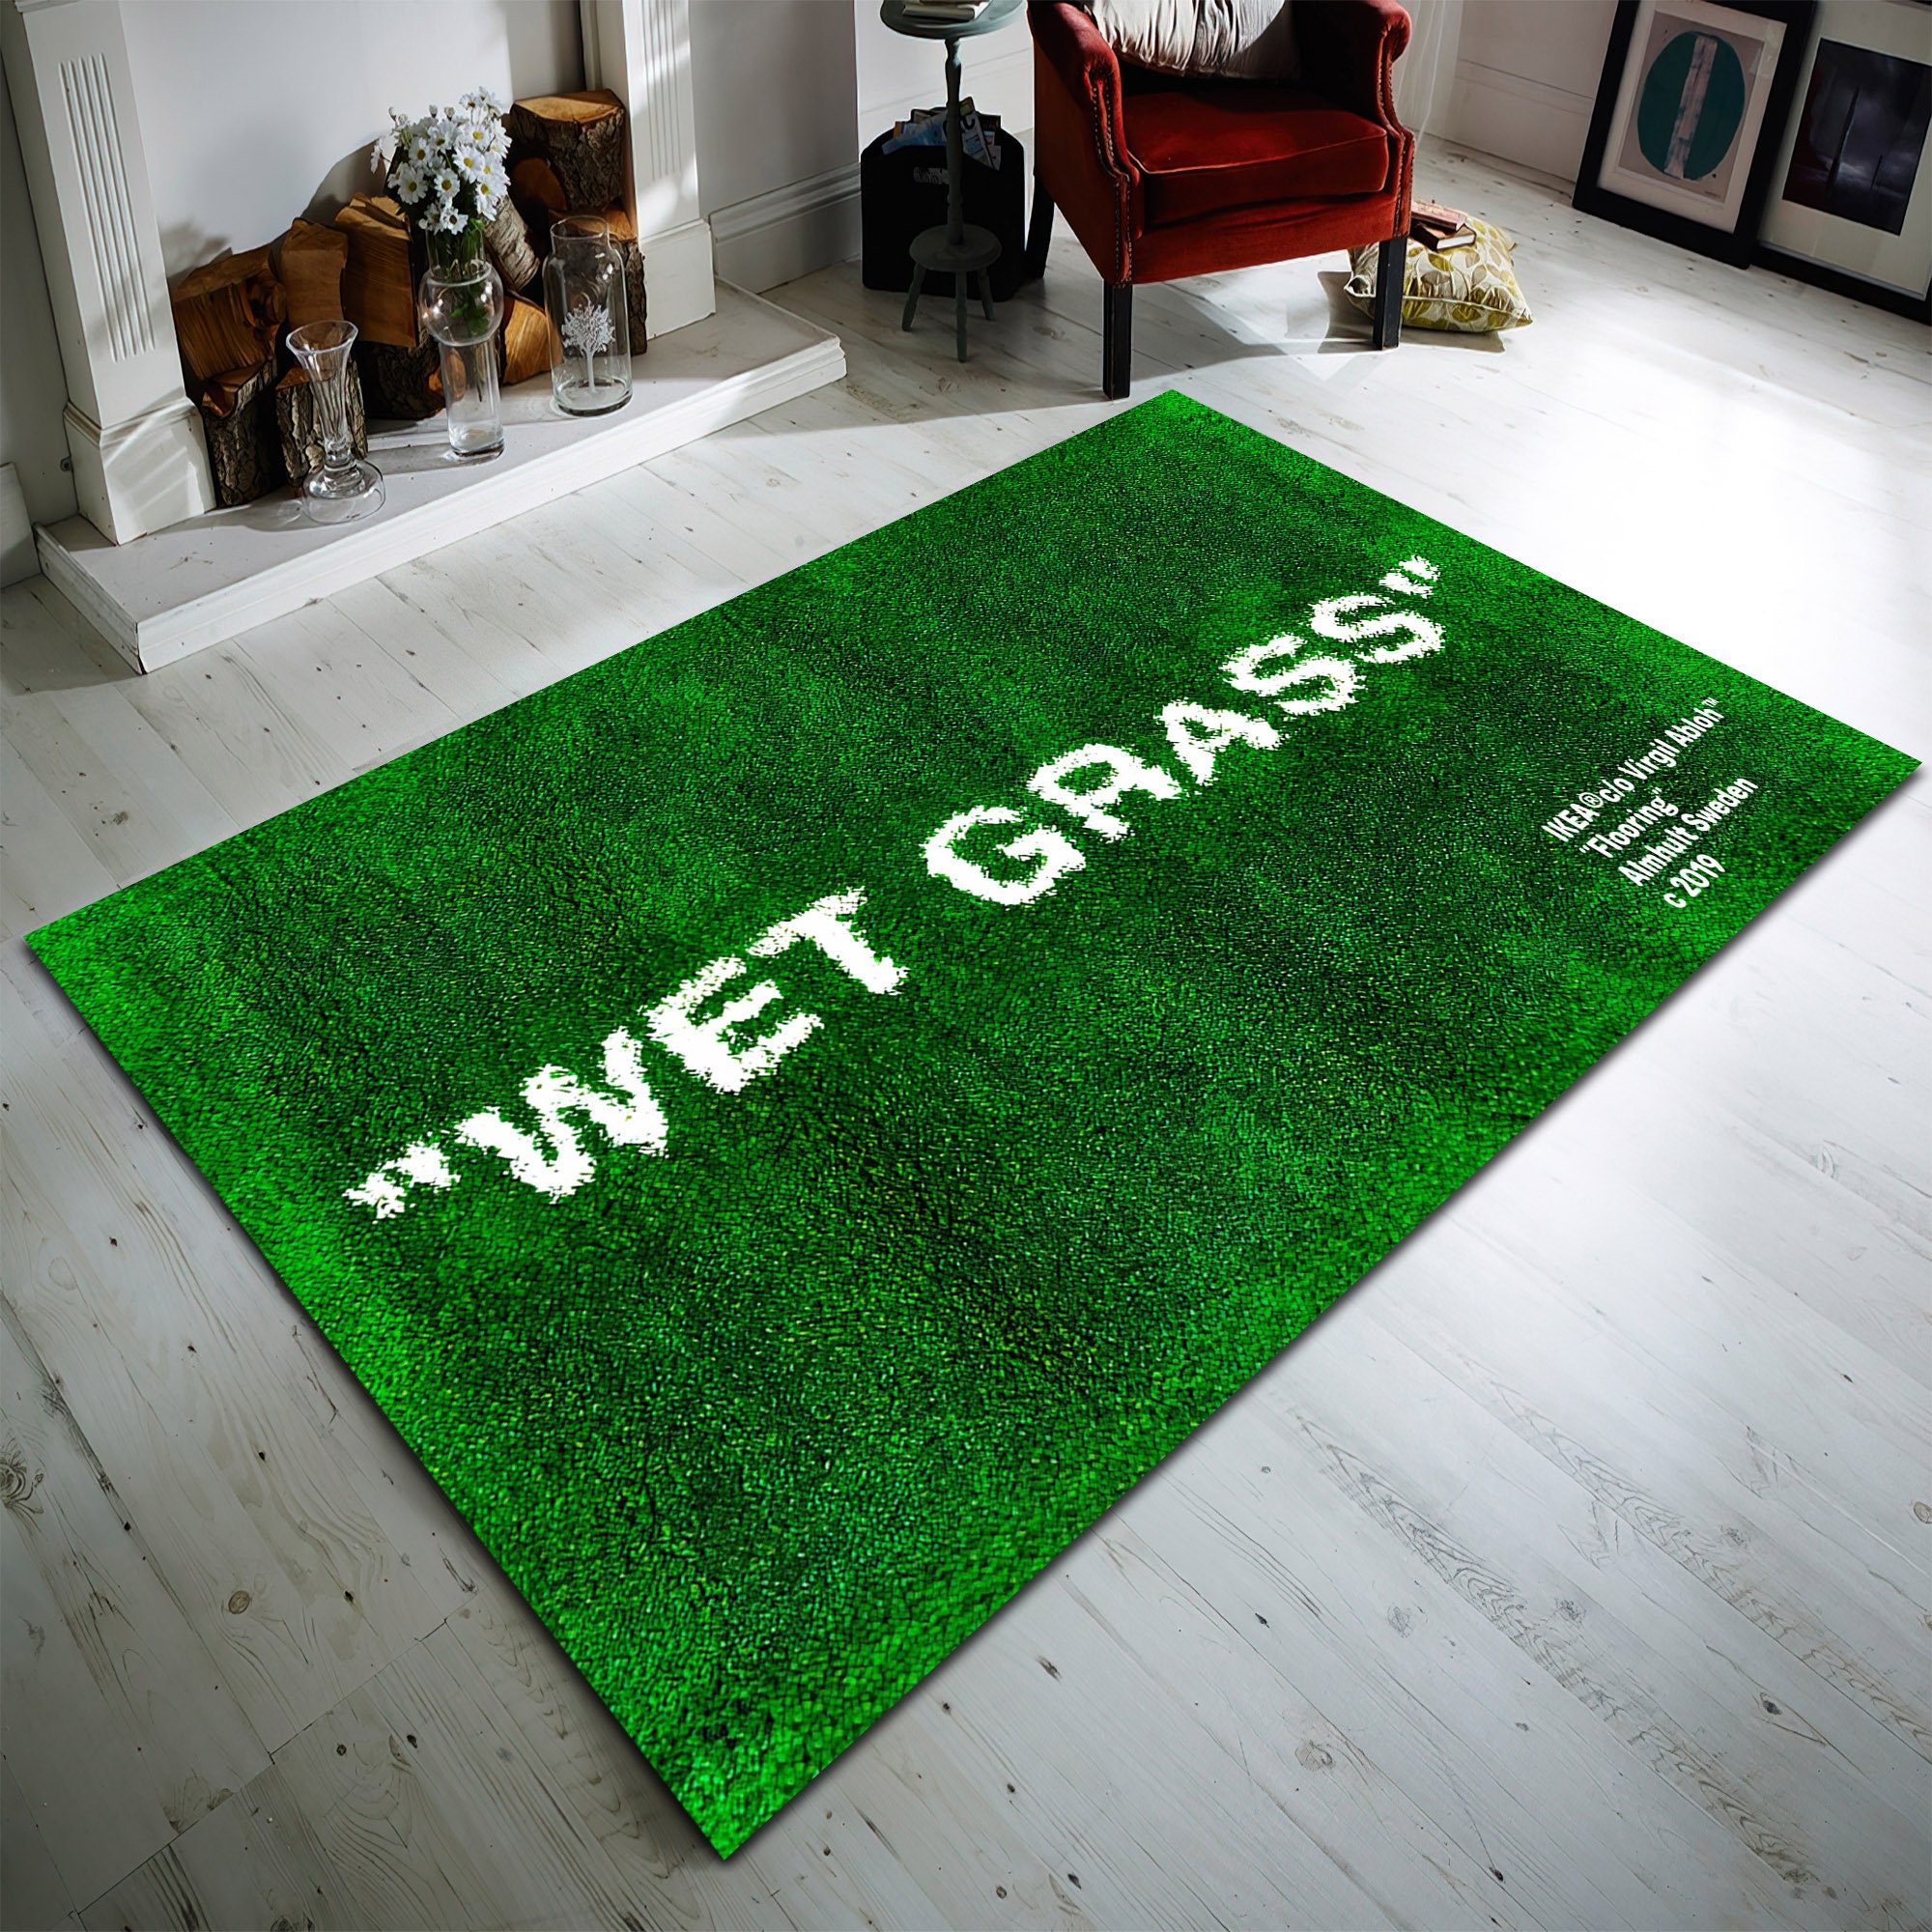 IKEA VIRGIL ABLOH “ WET GRASS” - www.nih3t3.com